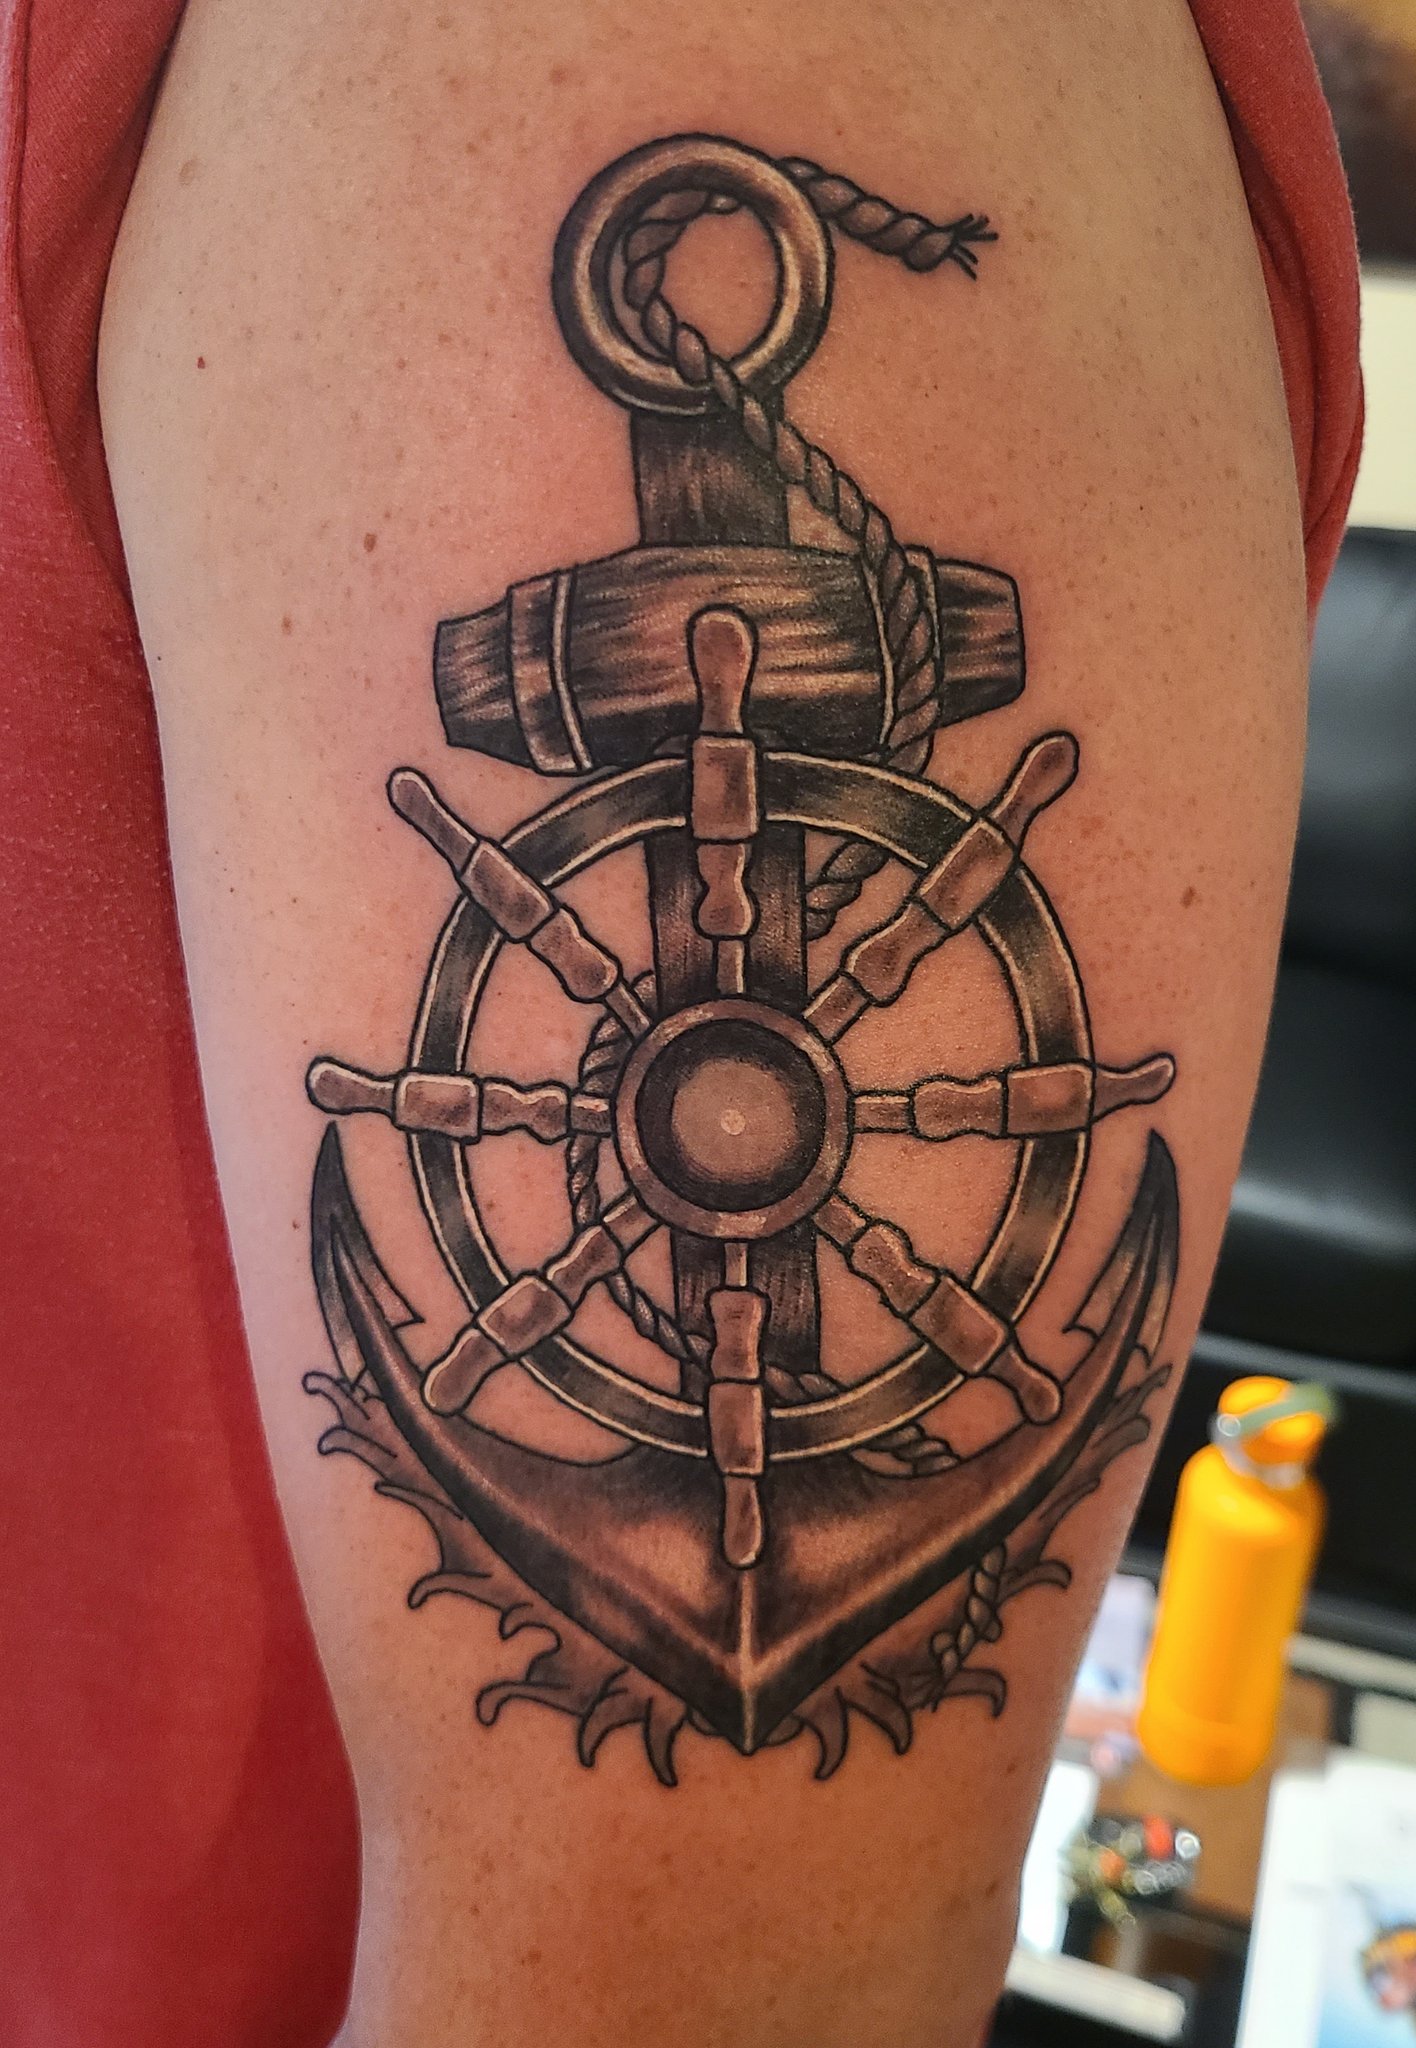 Bruce Benkert on X: Anchor Tattoo I Did Today. #tattoosbybee